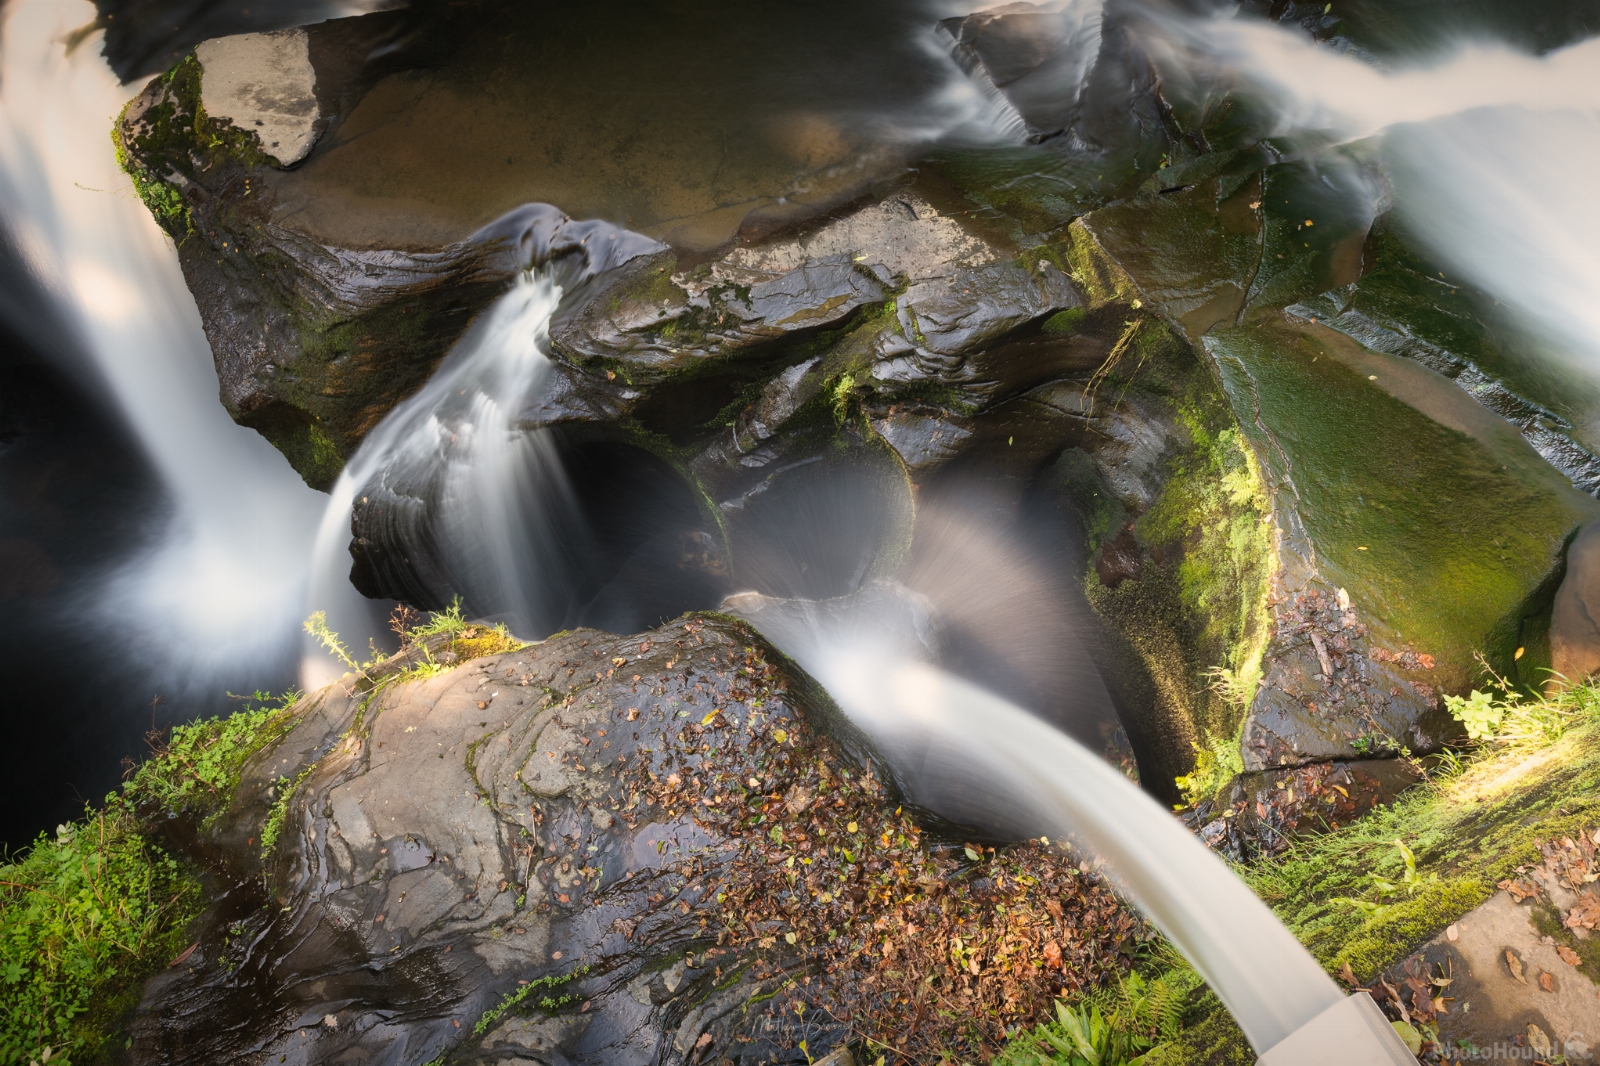 Image of Aberdulais Tin Works & Waterfall by Mathew Browne